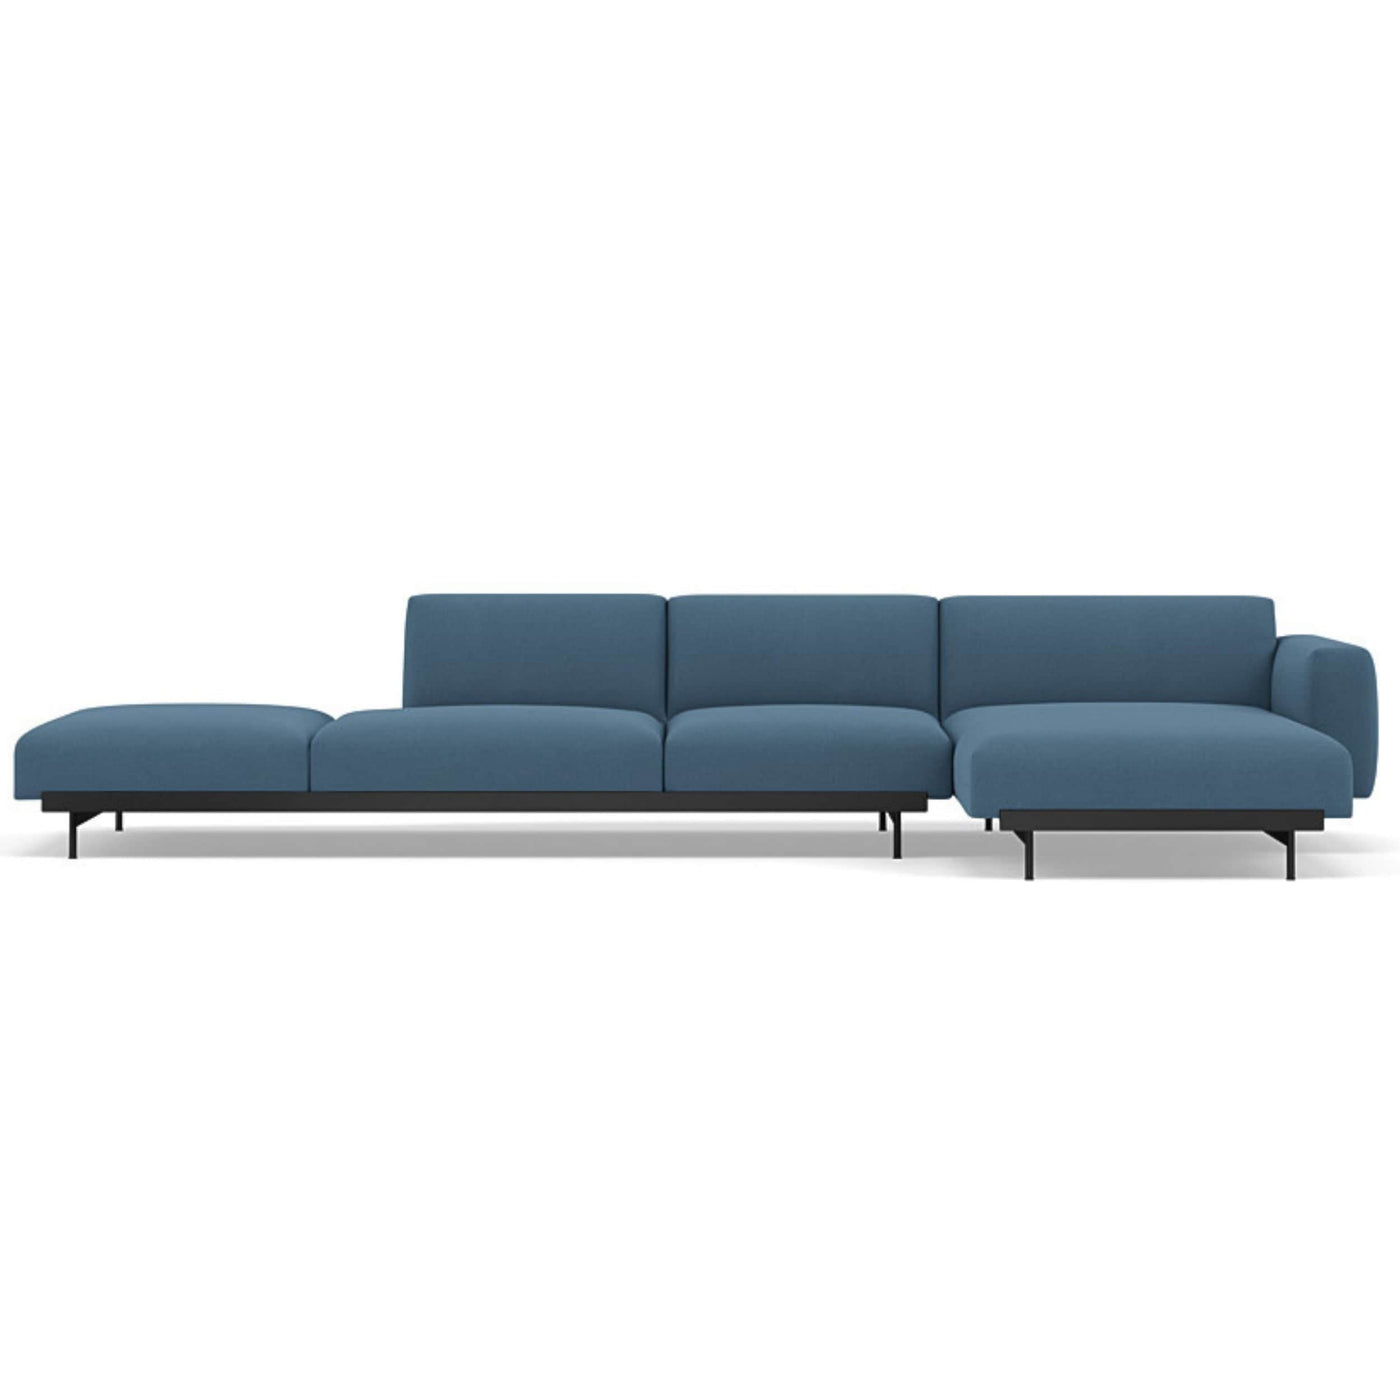 Muuto In Situ Modular 4 Seater Sofa configuration 4 in vidar 733. Made to order from someday designs. #colour_vidar-733